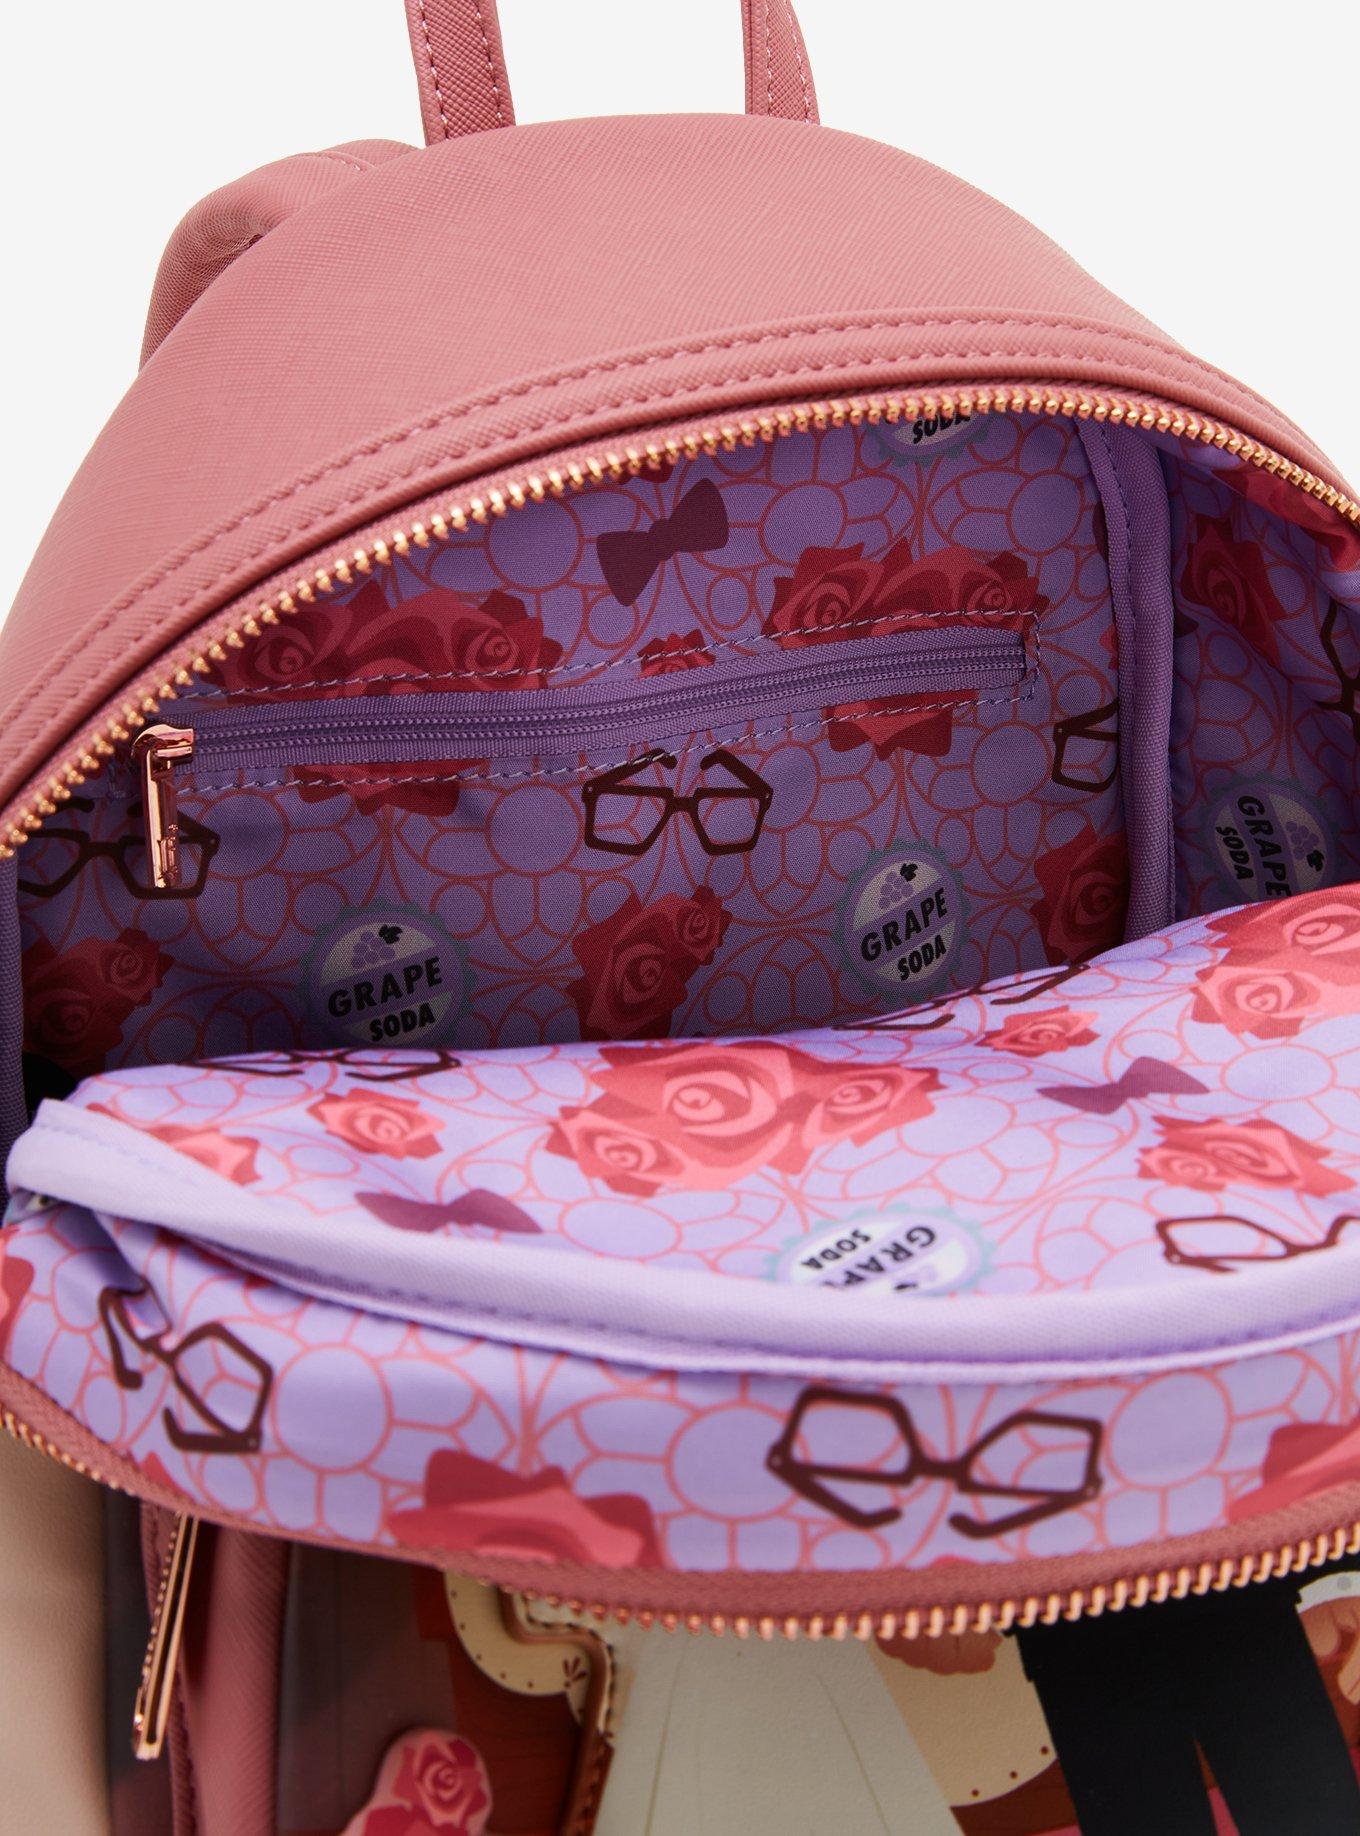 Loungefly Disney Pixar Up Carl & Ellie Wedding Scene Mini Backpack - BoxLunch Exclusive, , alternate